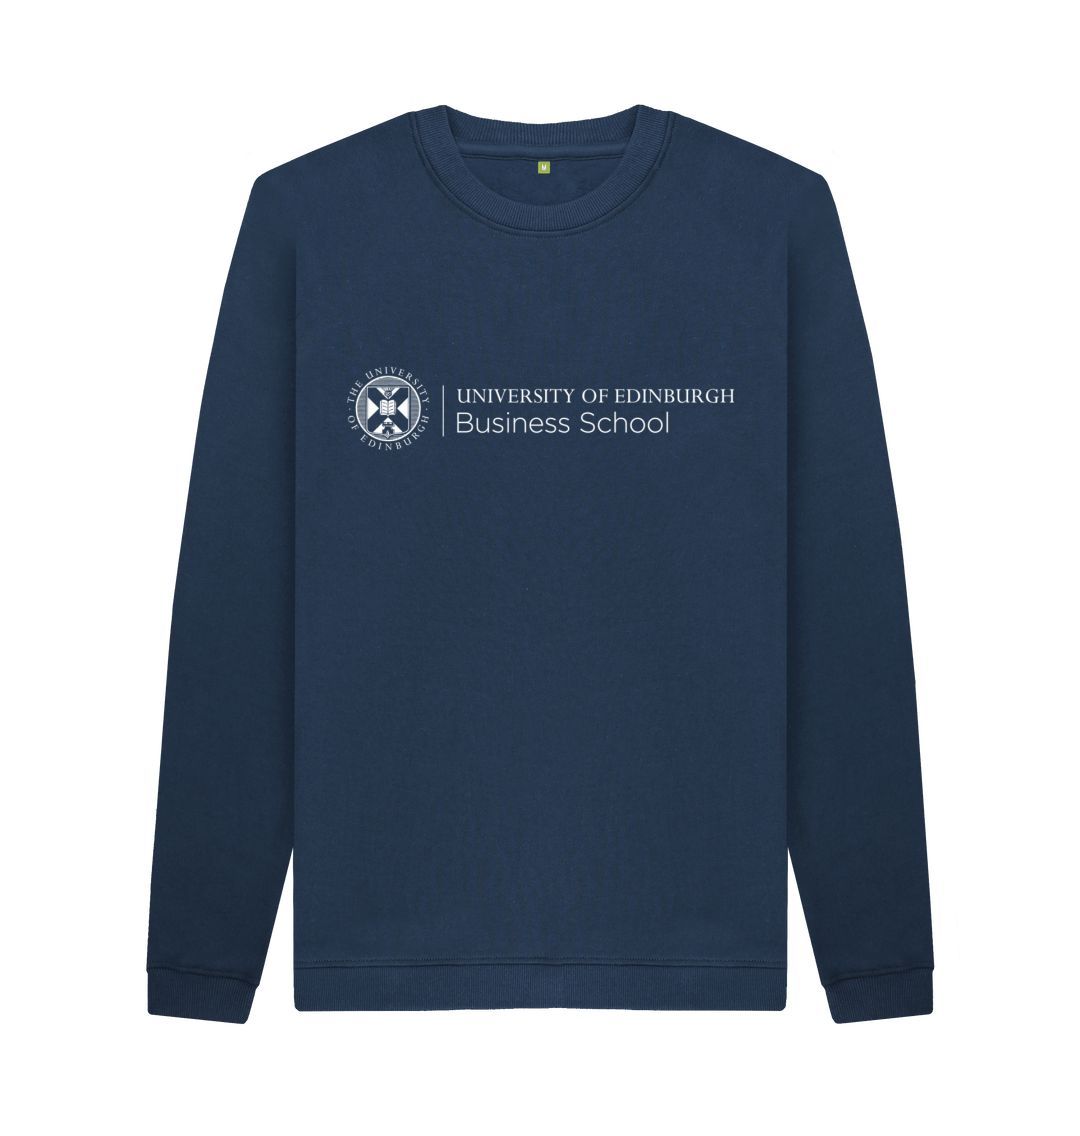 Navy sweatshirt with white University crest and text that reads ' University of Edinburgh Business School'